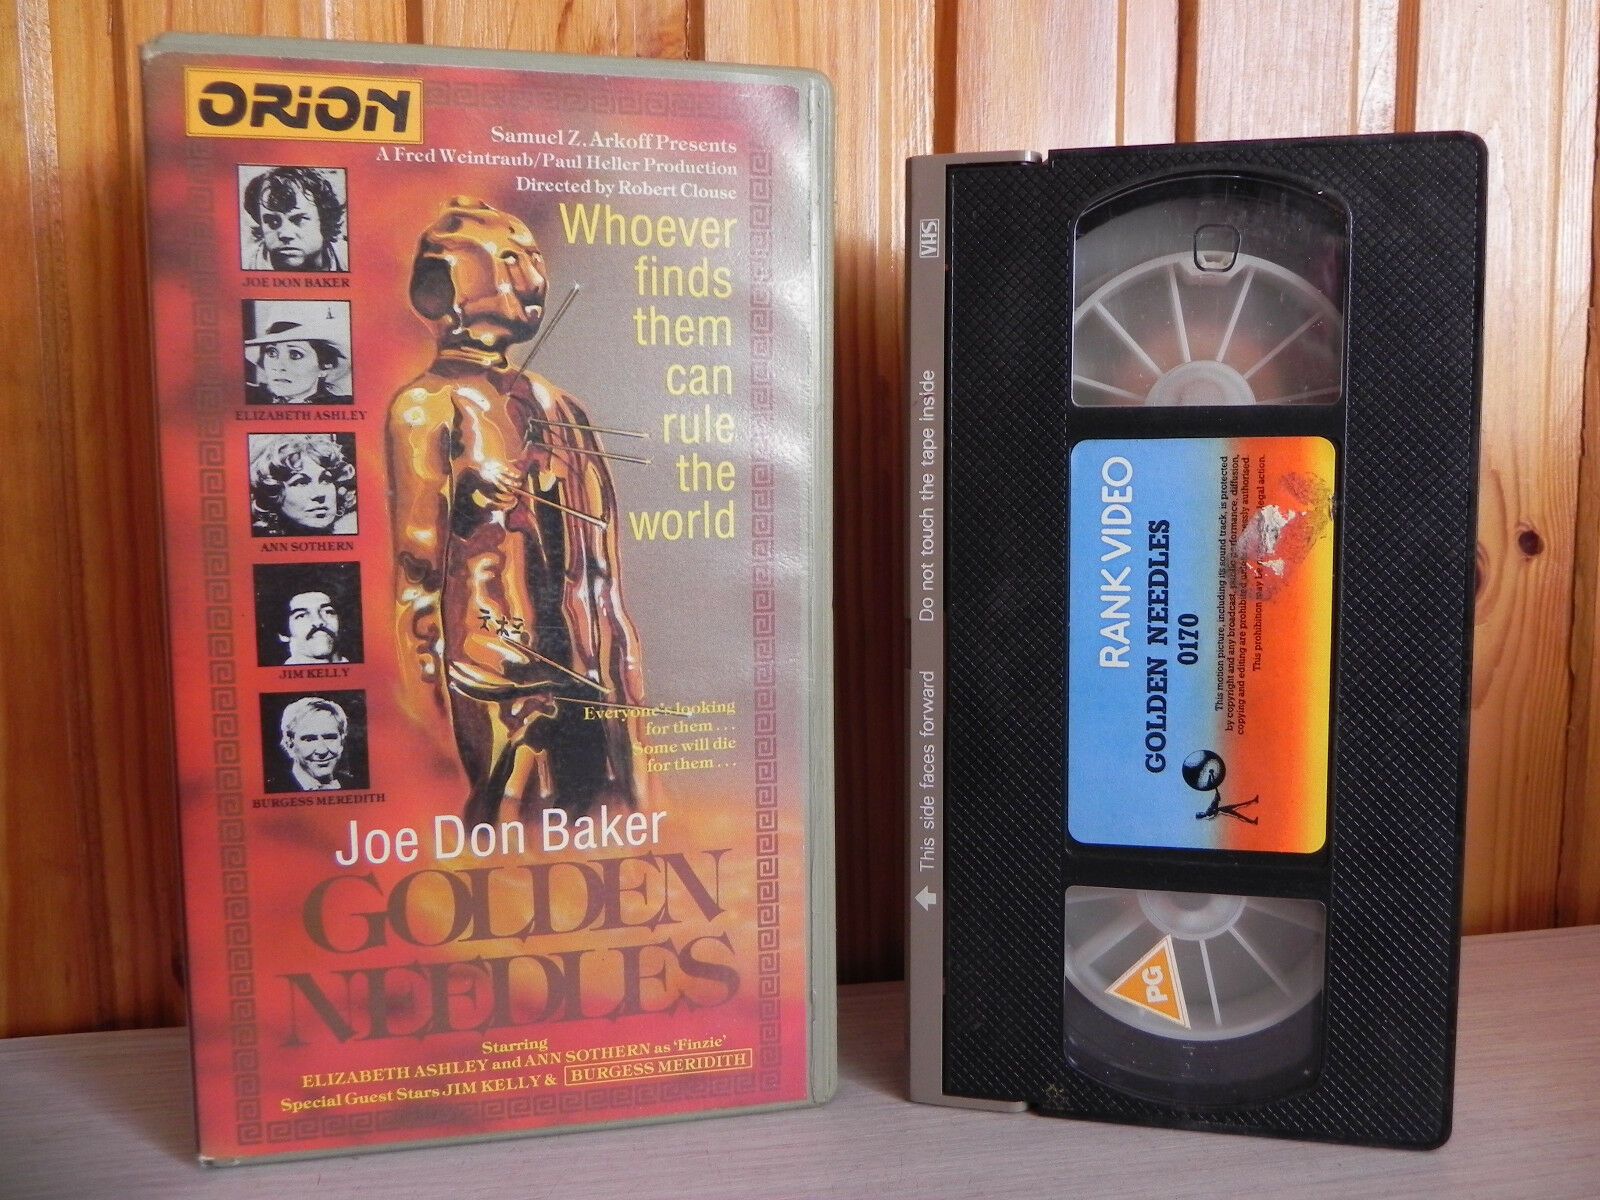 Golden Needles; [Jim Kelly] Battle For Immortality - Action - Pre Cert - Pal VHS-